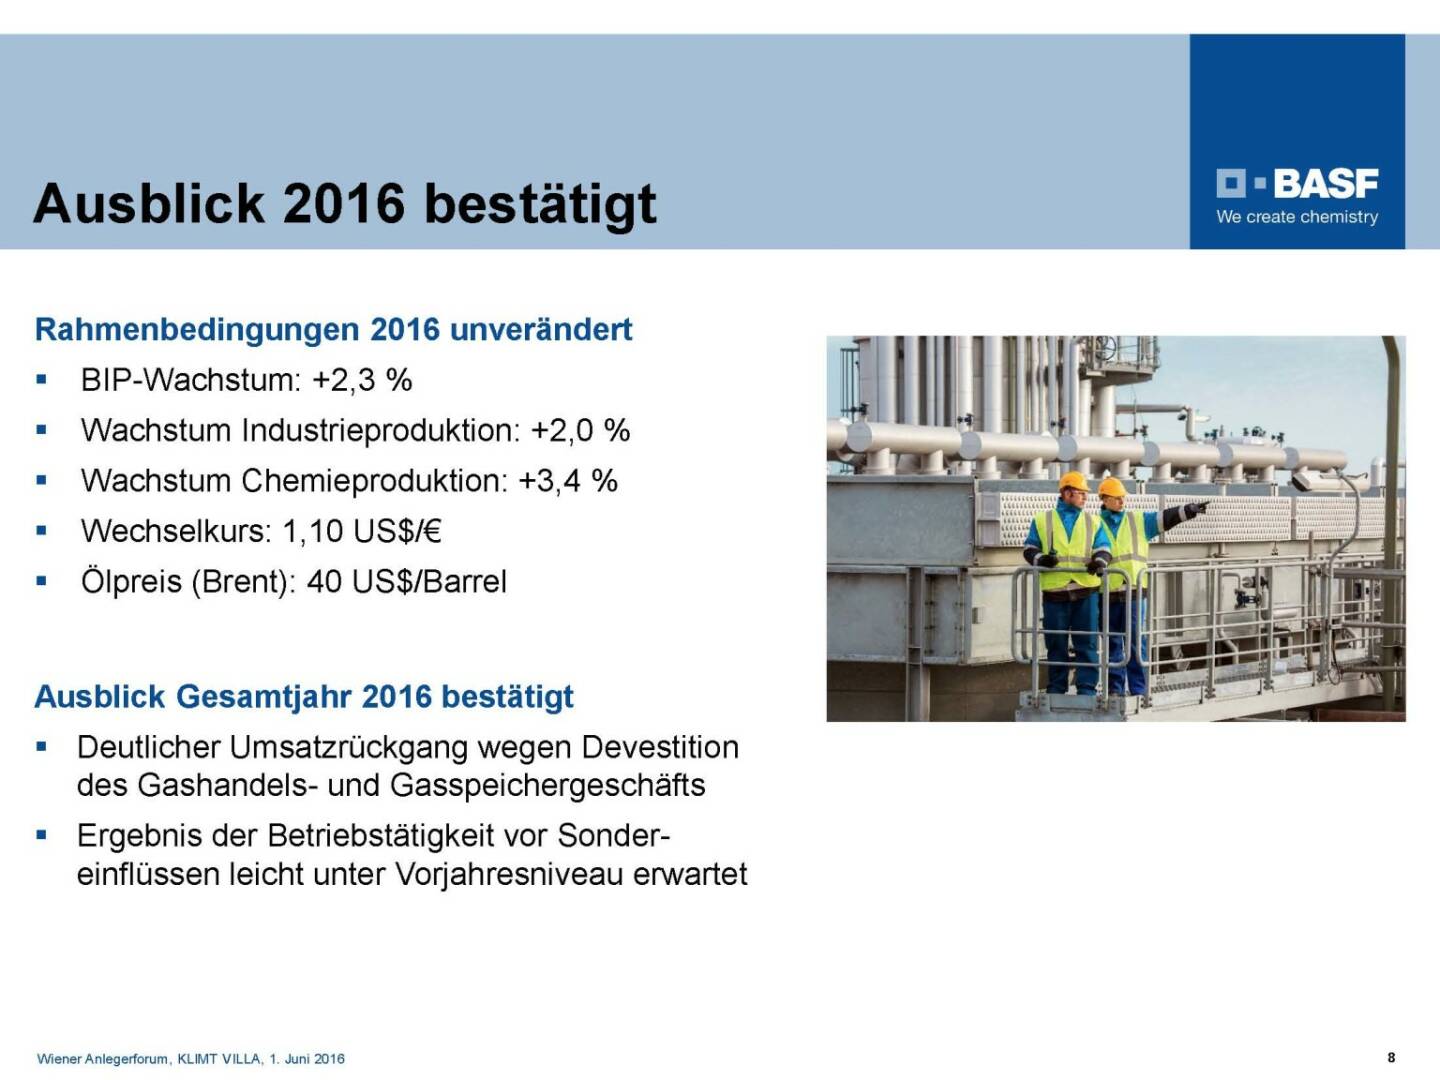 BASF - Ausblick 2016 bestätigt